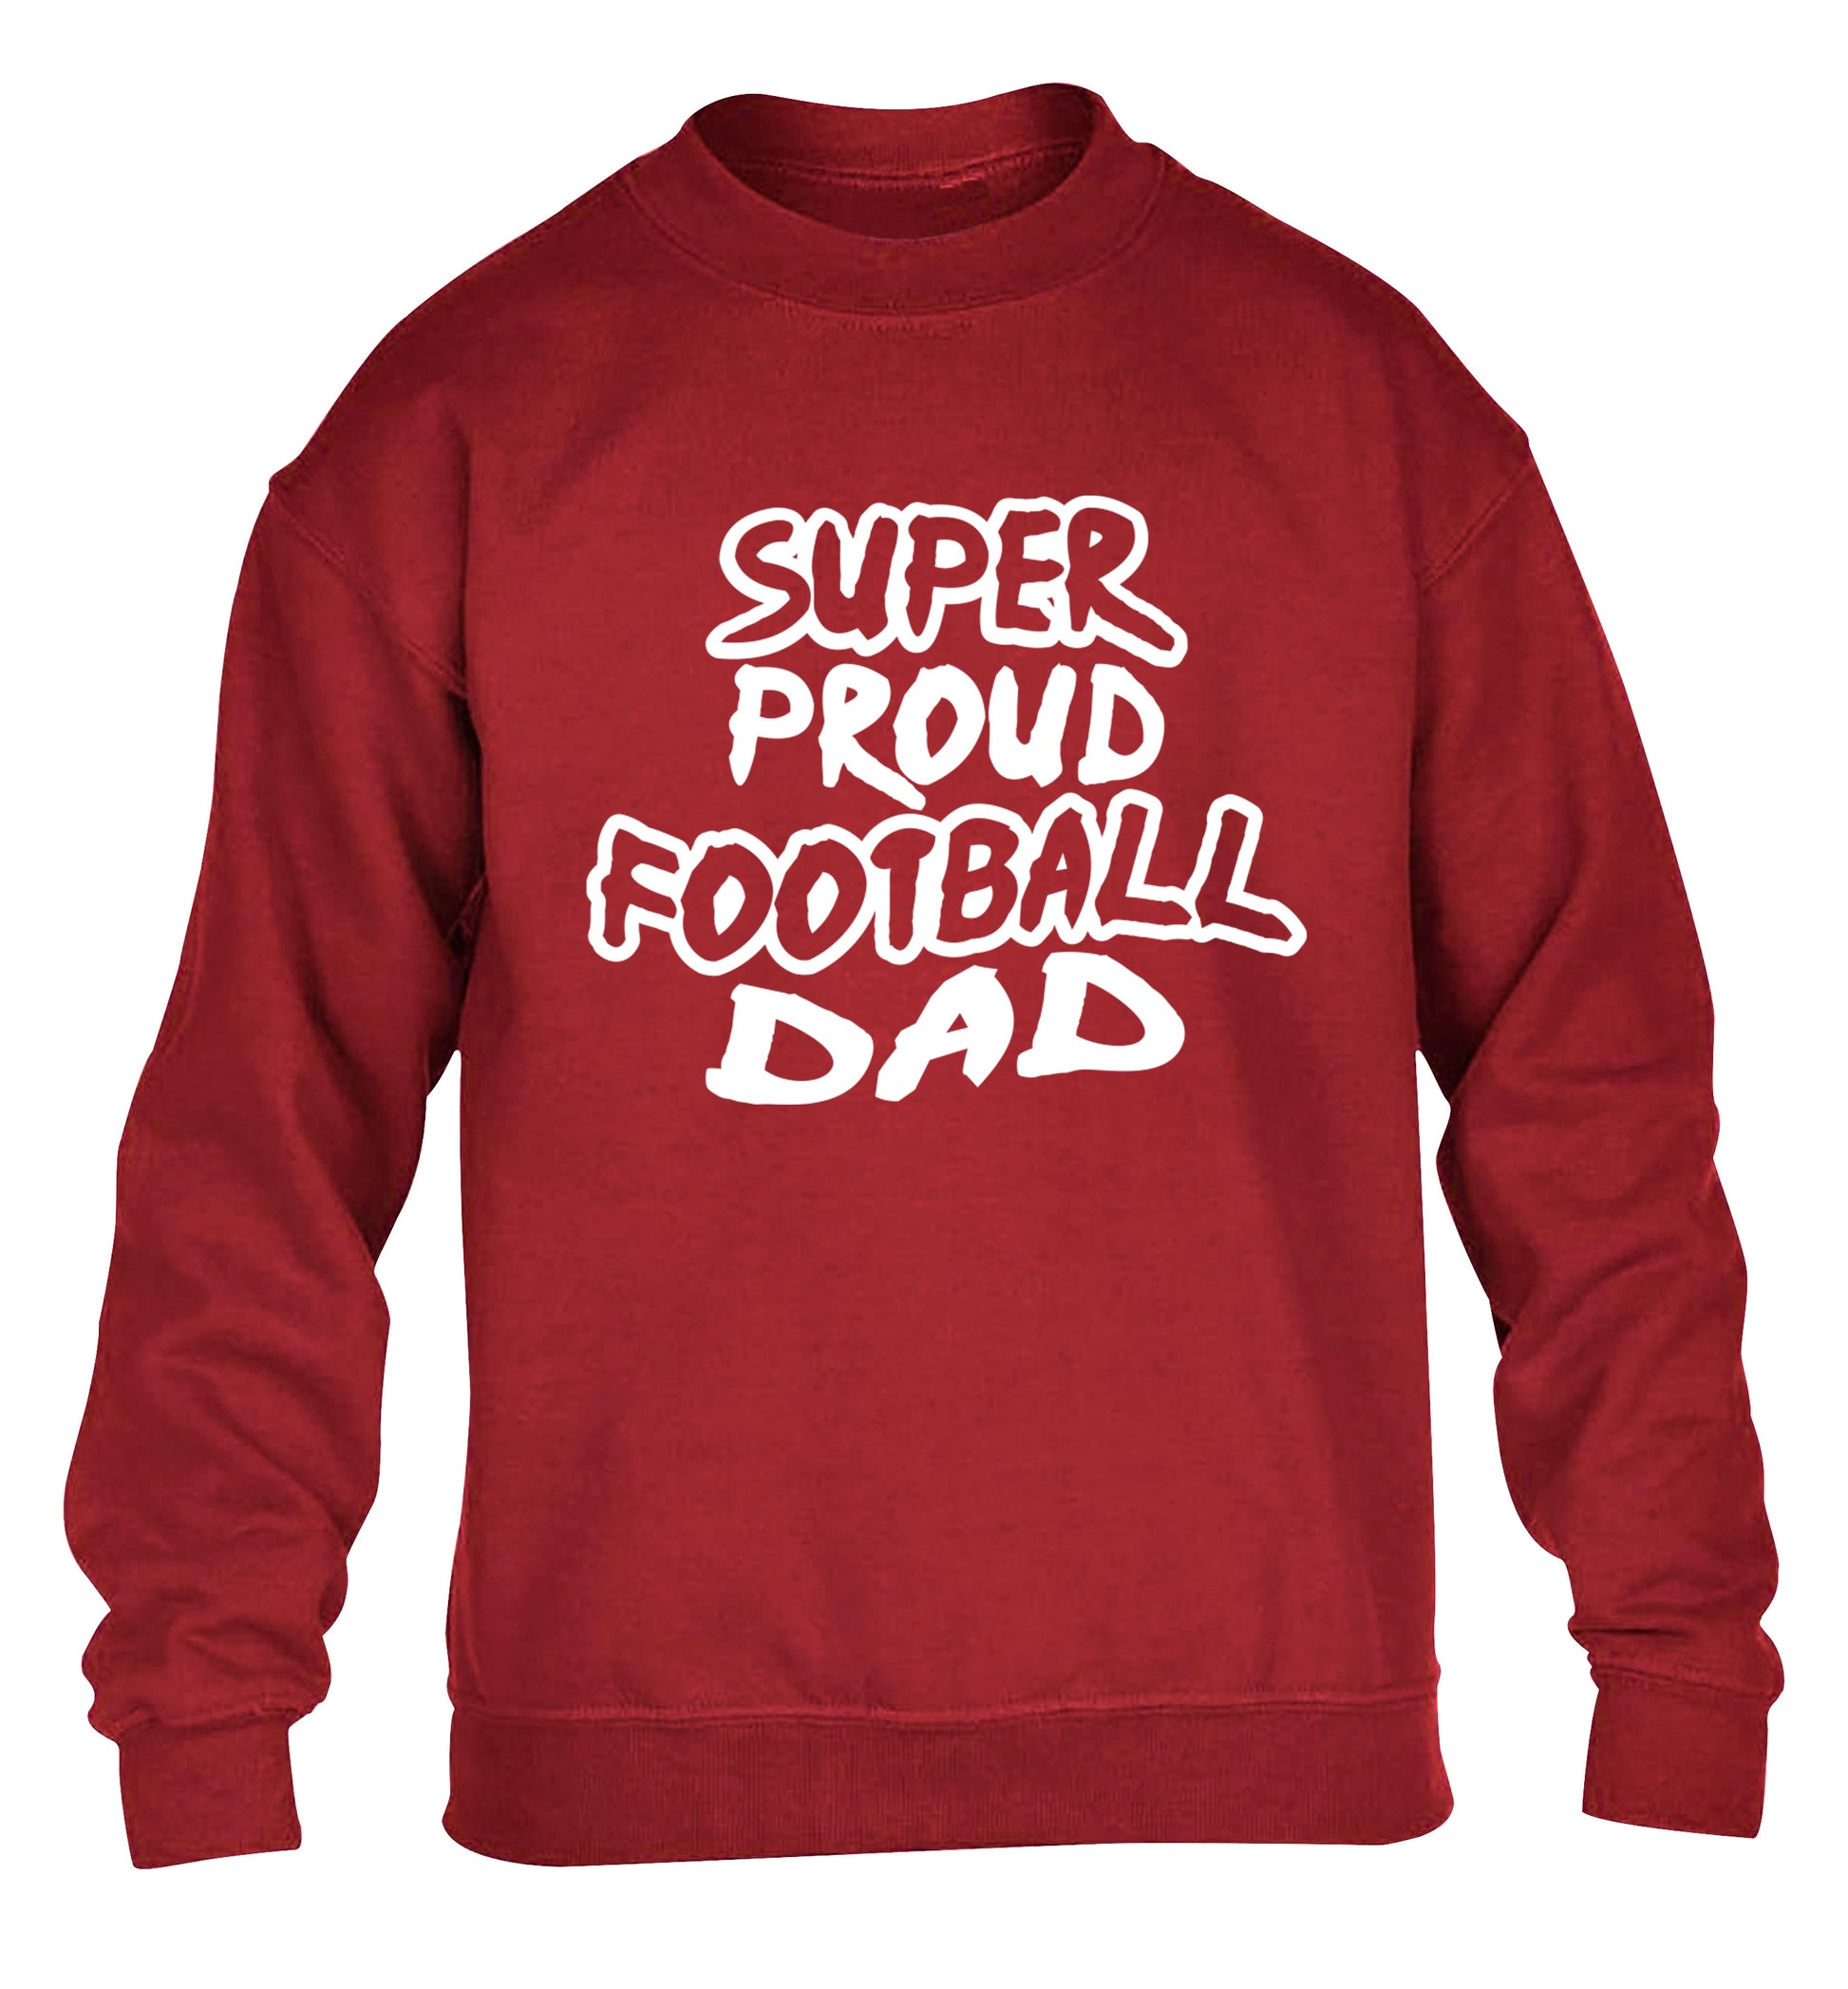 Super proud football dad children's grey sweater 12-14 Years